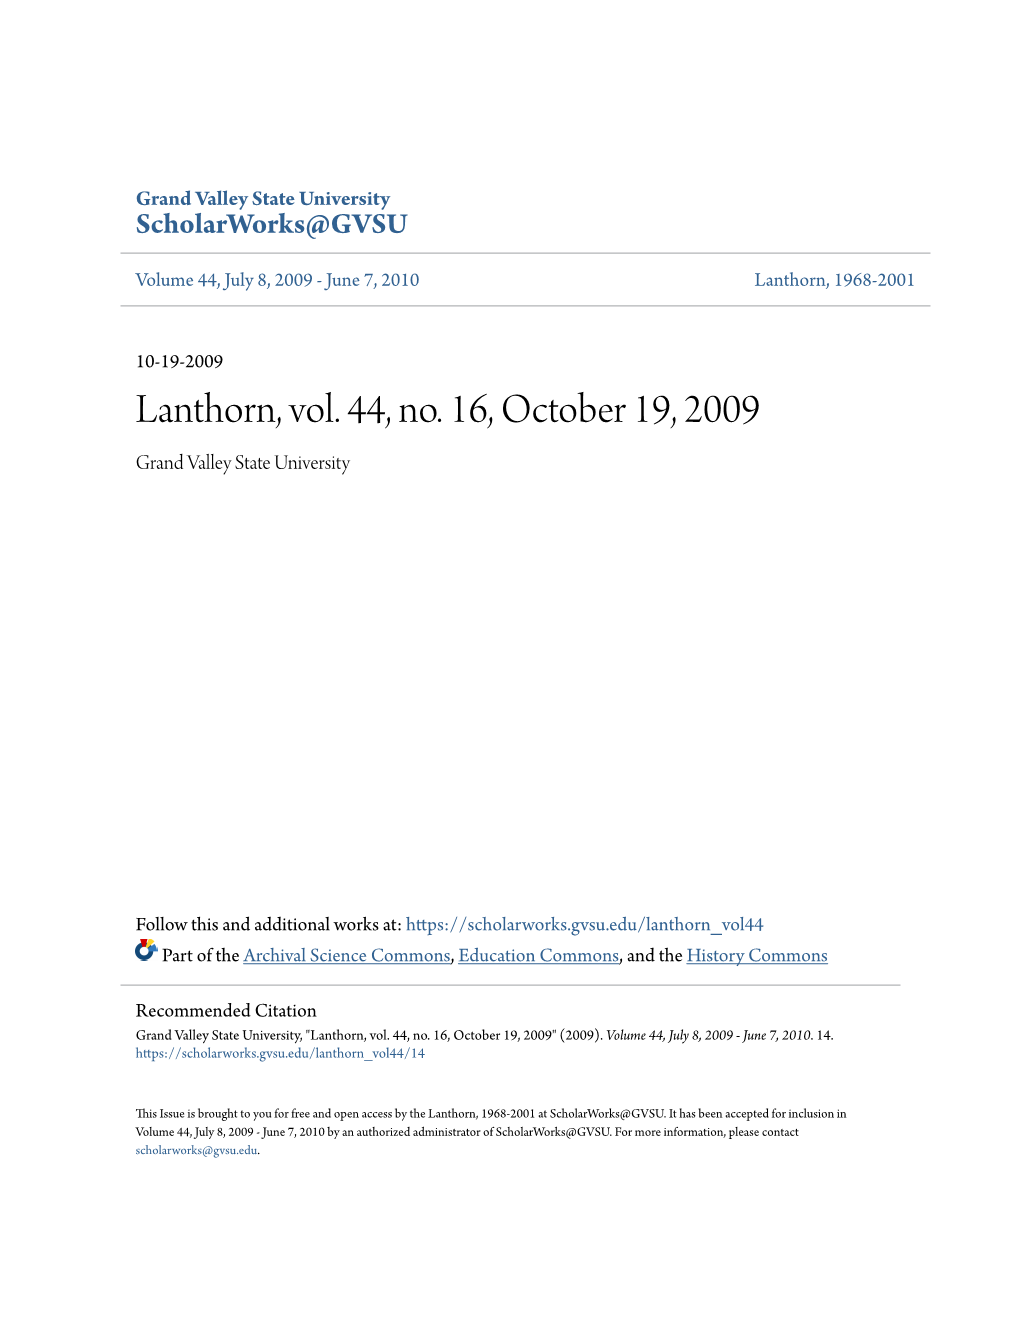 Lanthorn, Vol. 44, No. 16, October 19, 2009 Grand Valley State University